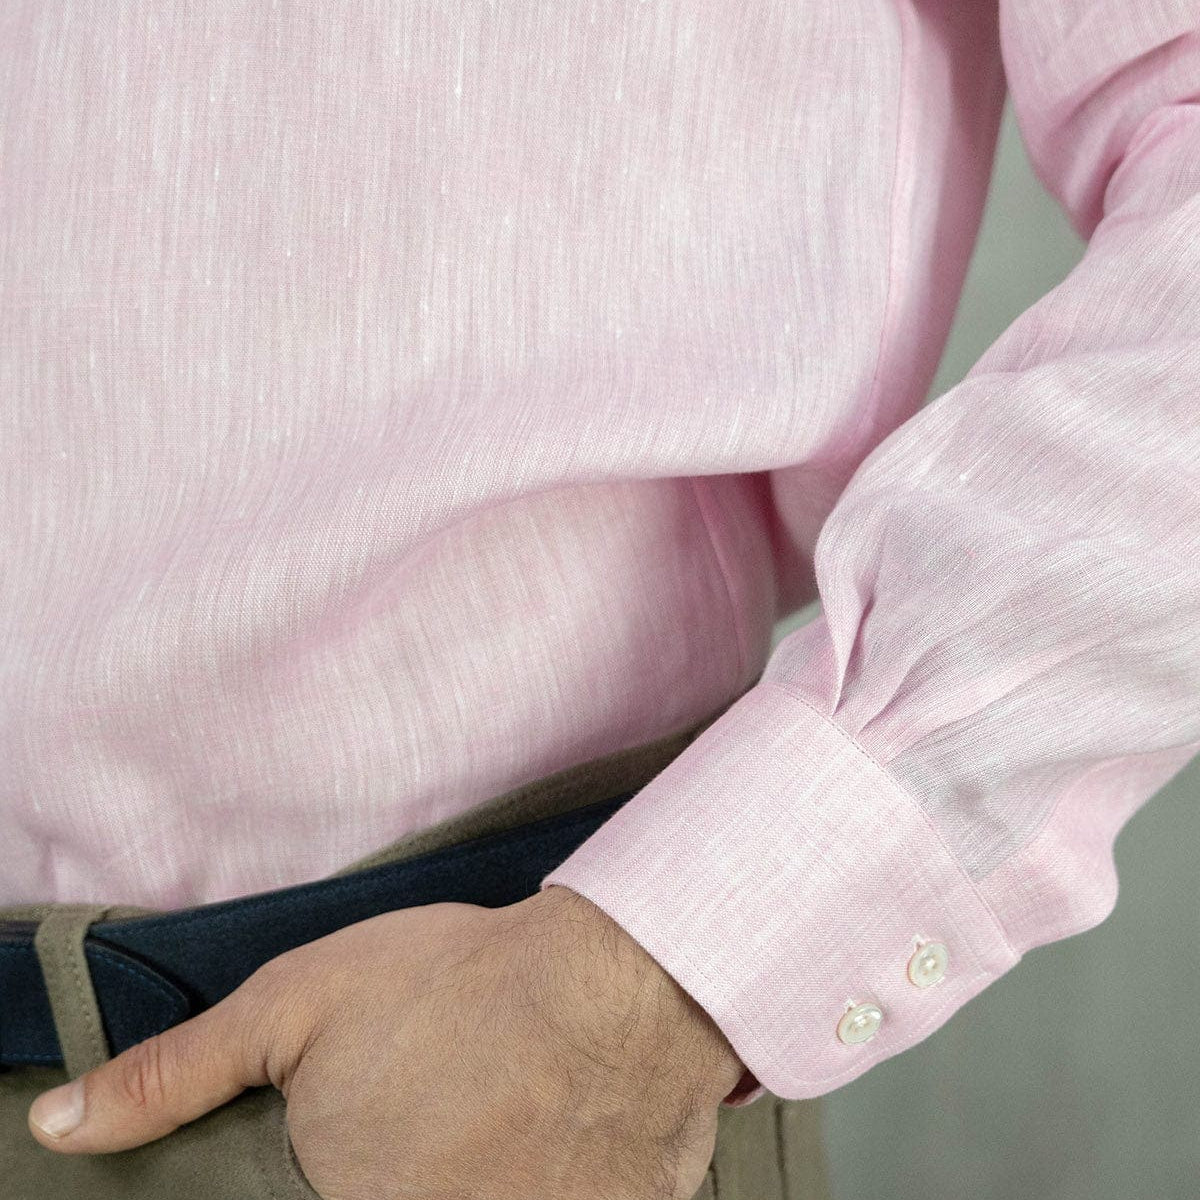 Contemporary Fit, Button Down Collar, 2 Button Cuff Shirt in Plain Pink Linen